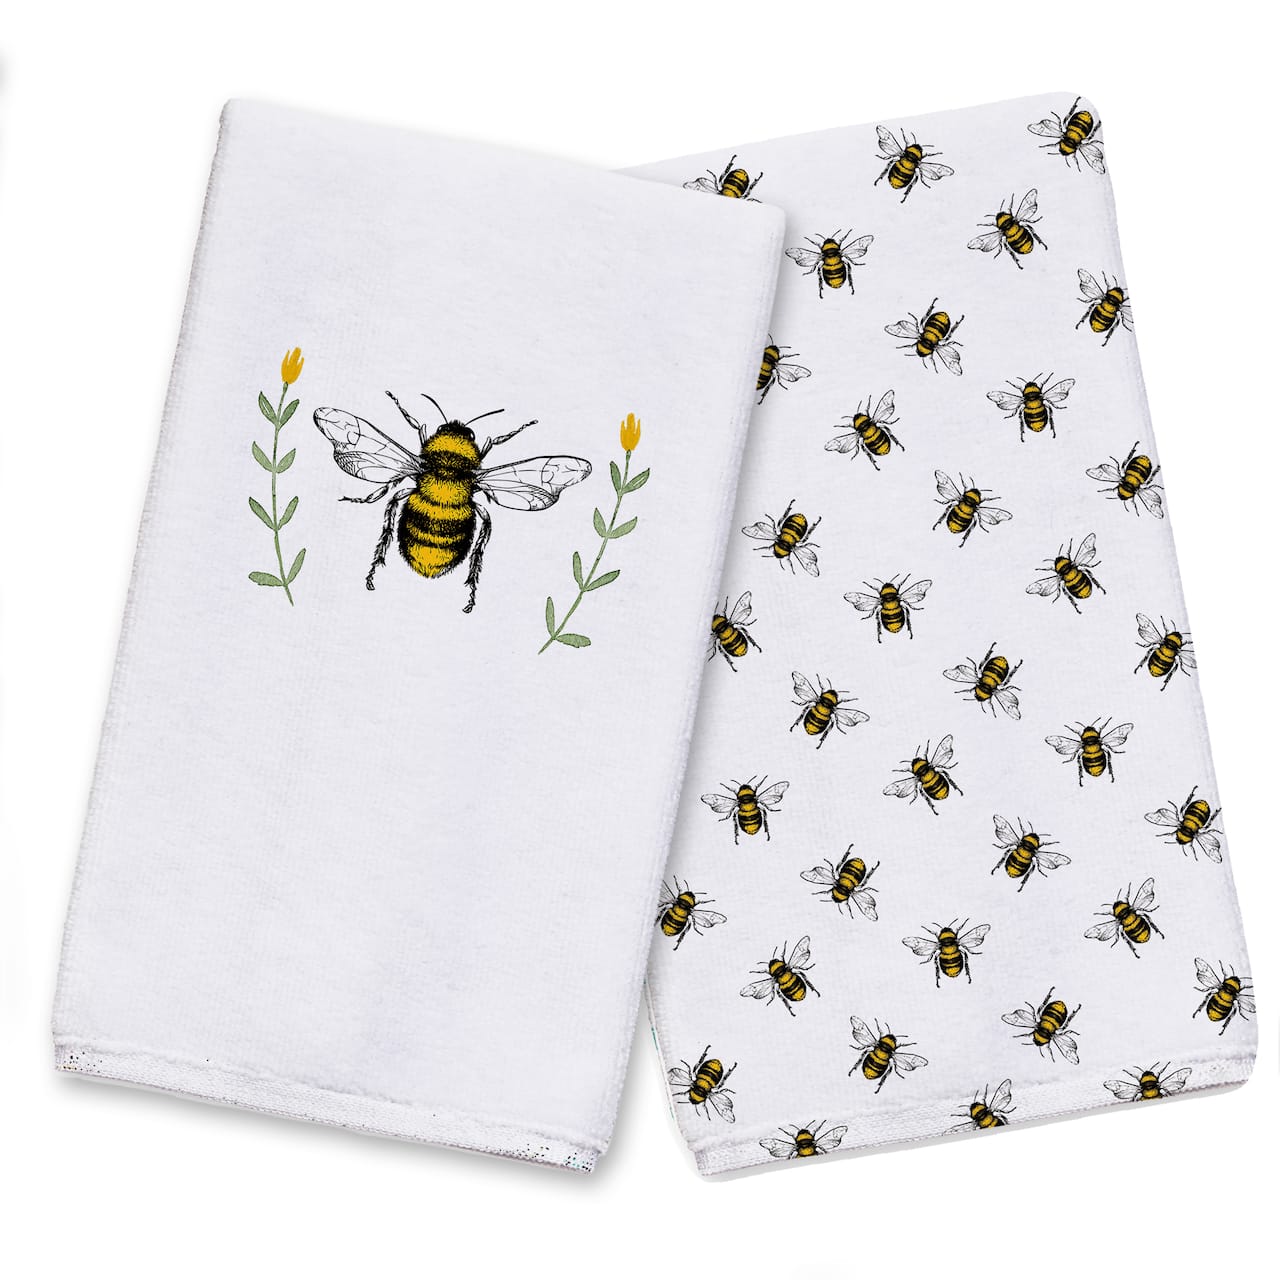 Bee With Watercolor Flowers 16 x 25 Tea Towel Set of 2